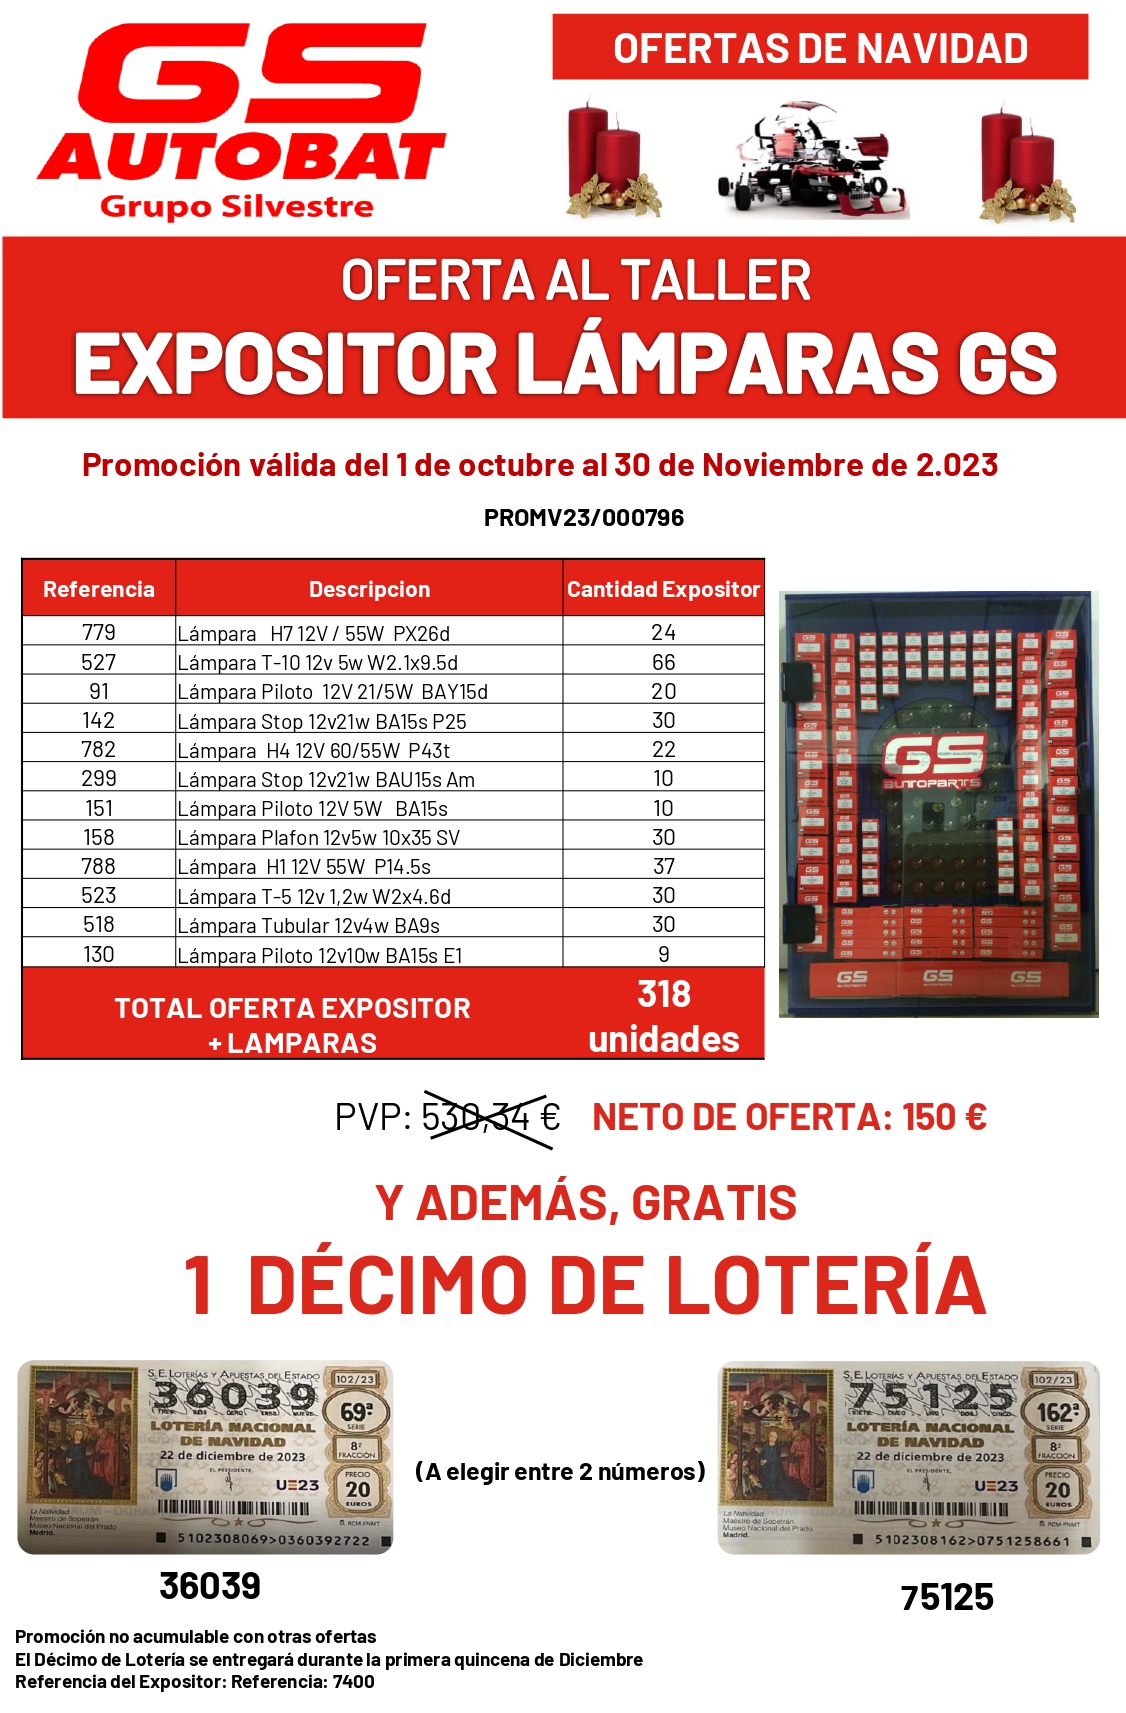 EXPOSITOR LÁMPARAS GS>